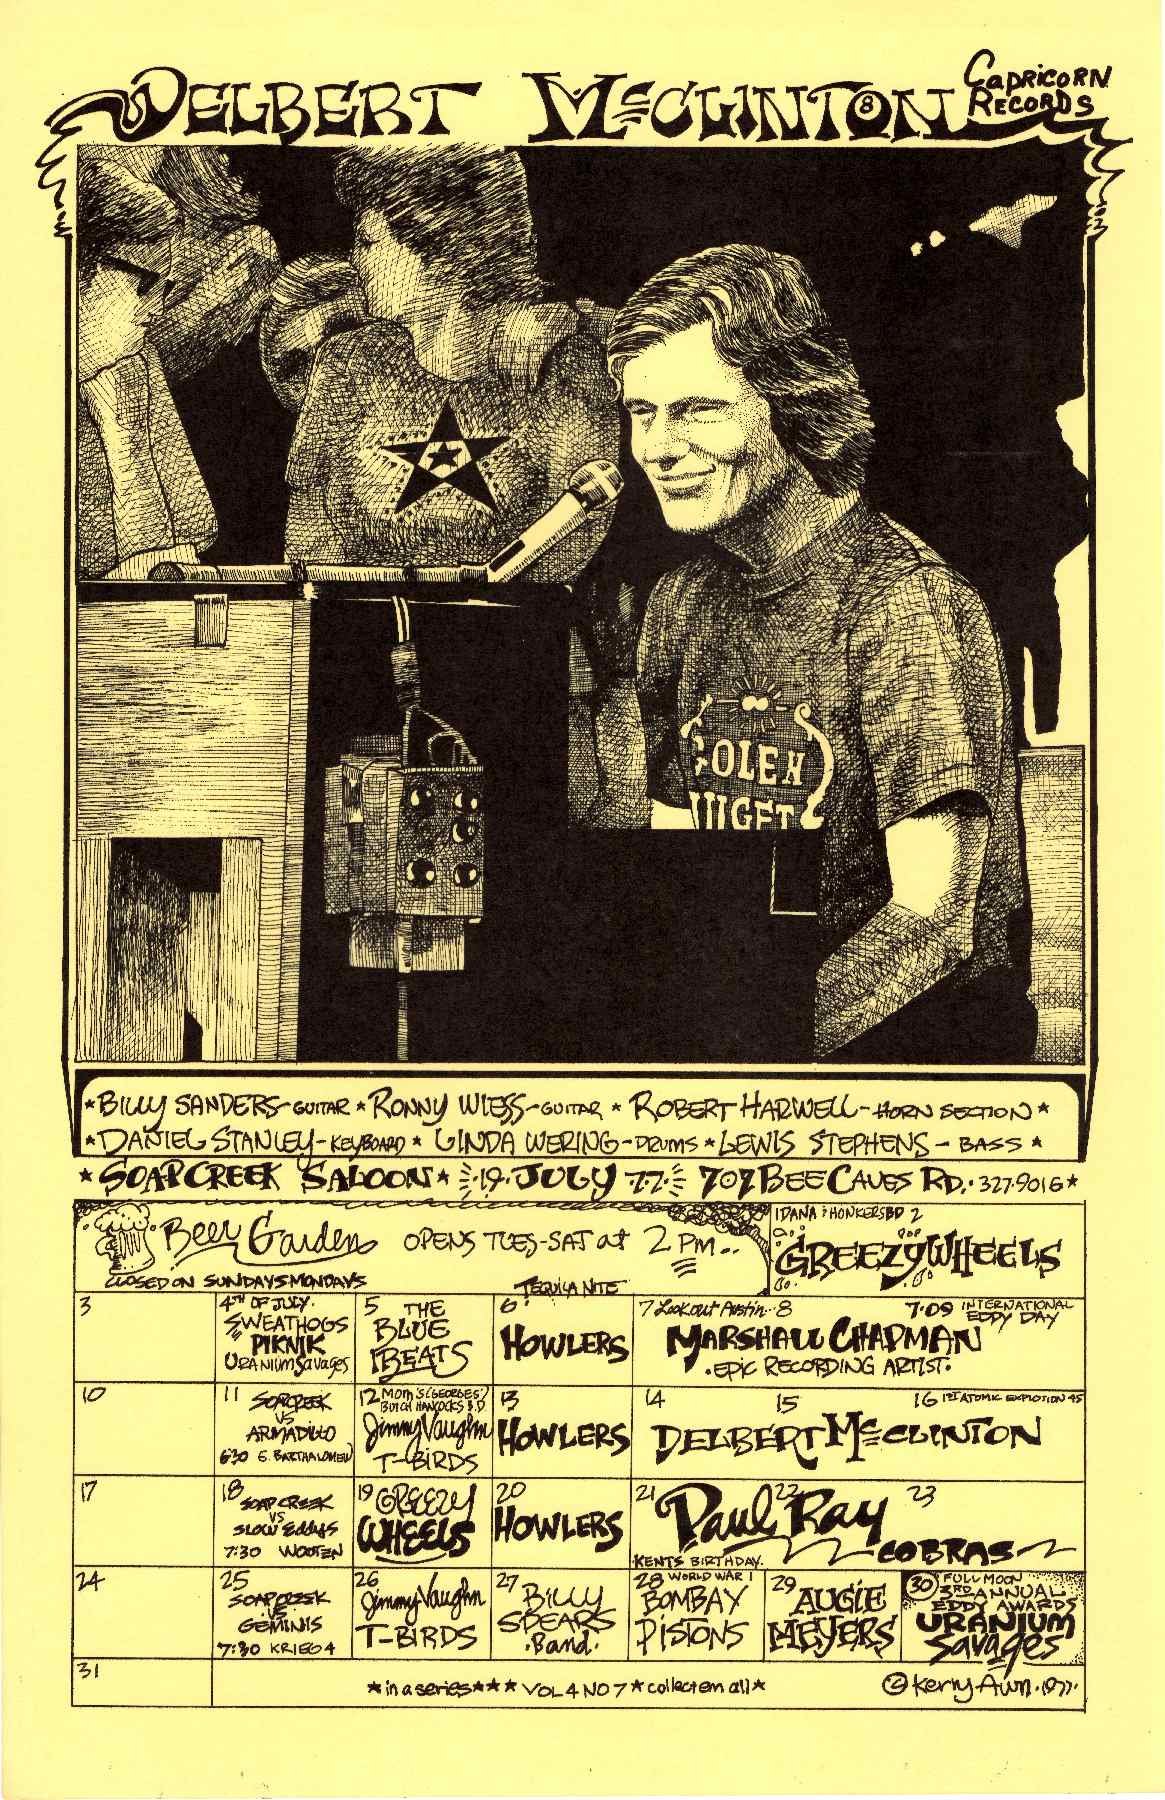 1977.07.July Calendar.Soap Creek Saloon.Awn.JPG